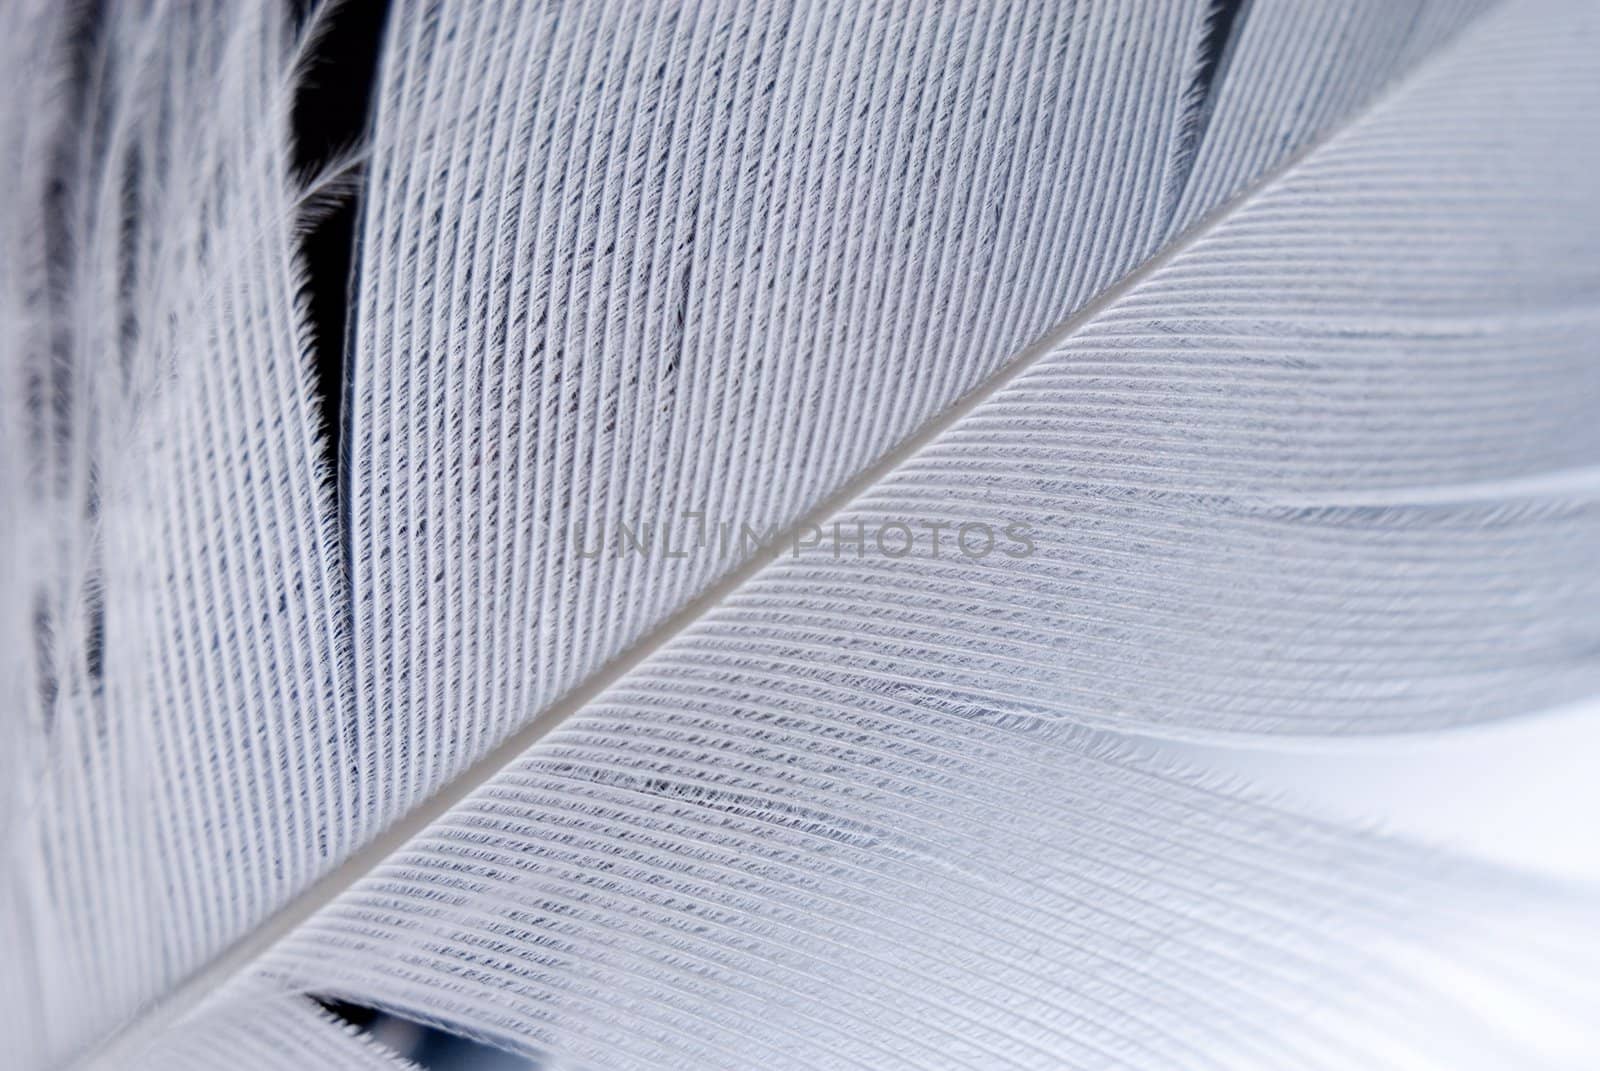 Bird's feather detail. Shallow depth of field.